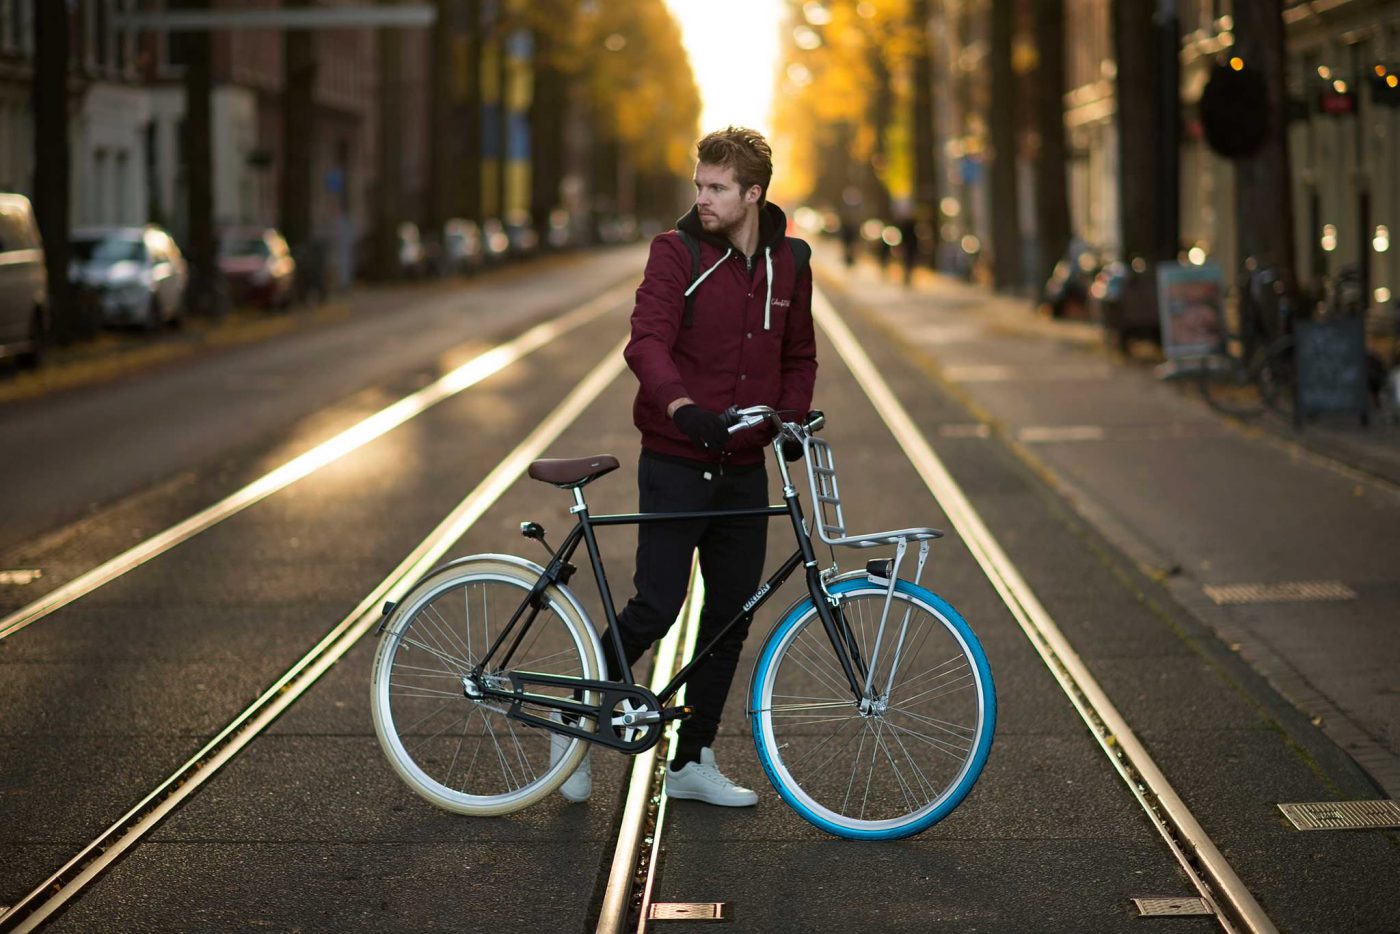 Swapfiets: เช่าจักรยานรายเดือนในเนเธอร์แลนด์ มีให้เปลี่ยน-ให้ใช้ -ไม่ต้องซ่อมเอง